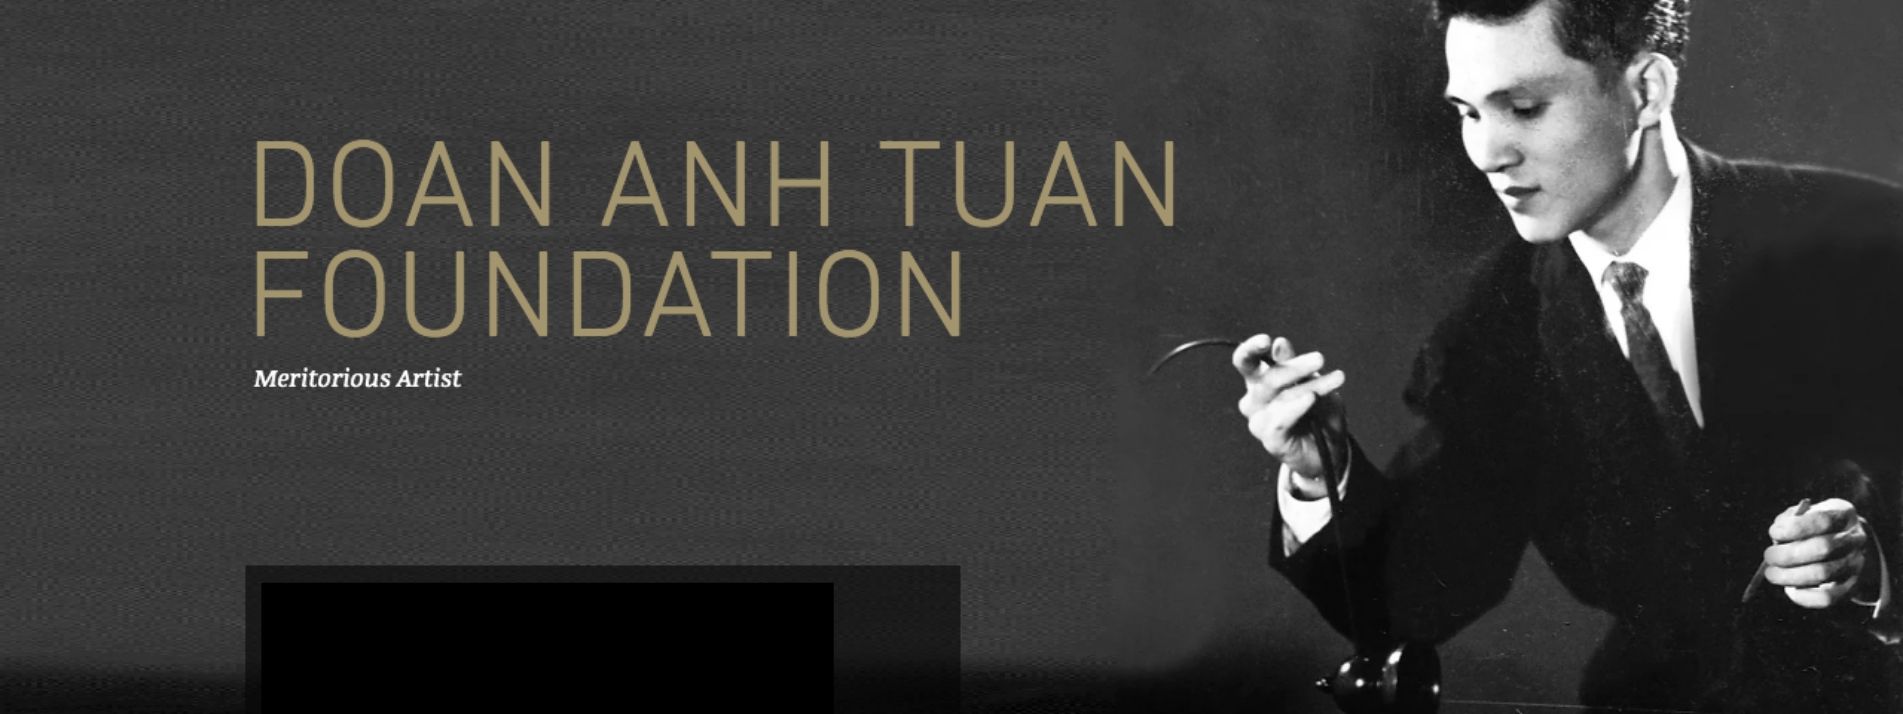 Doan Anh Tuan Foundation